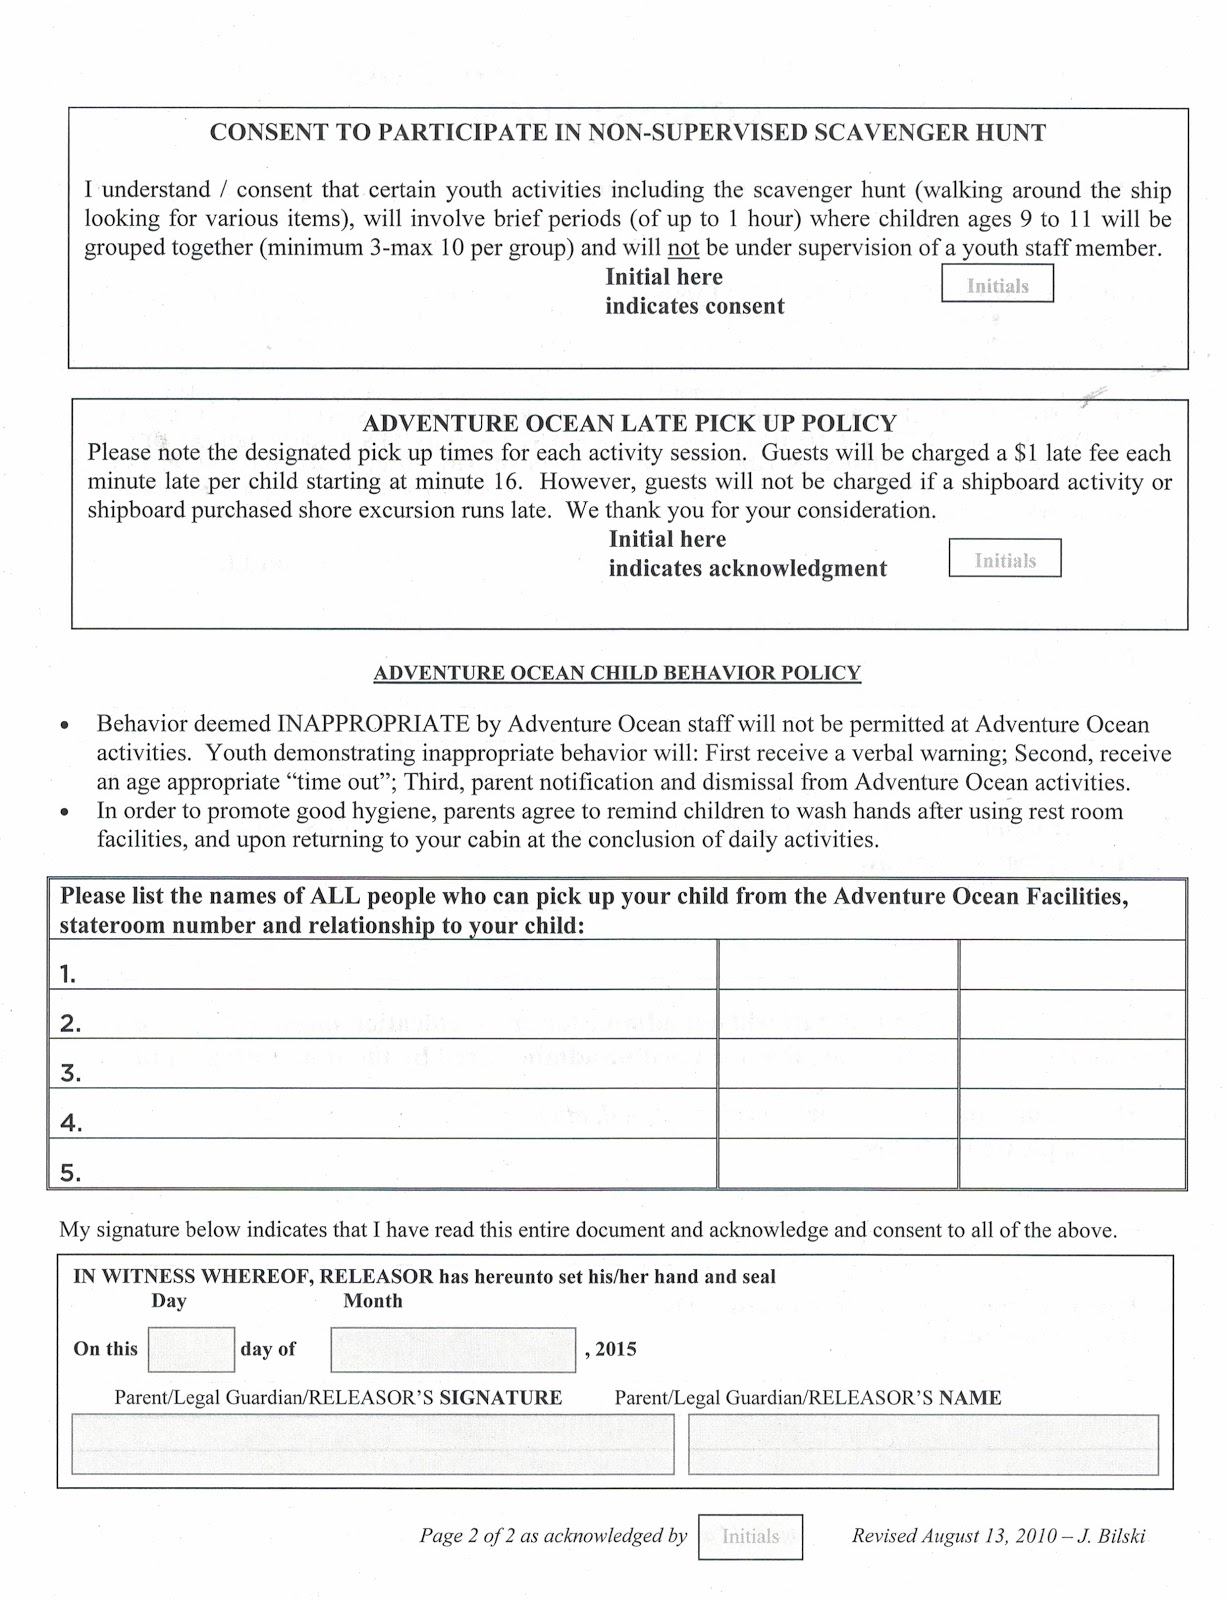 royal caribbean child travel consent form